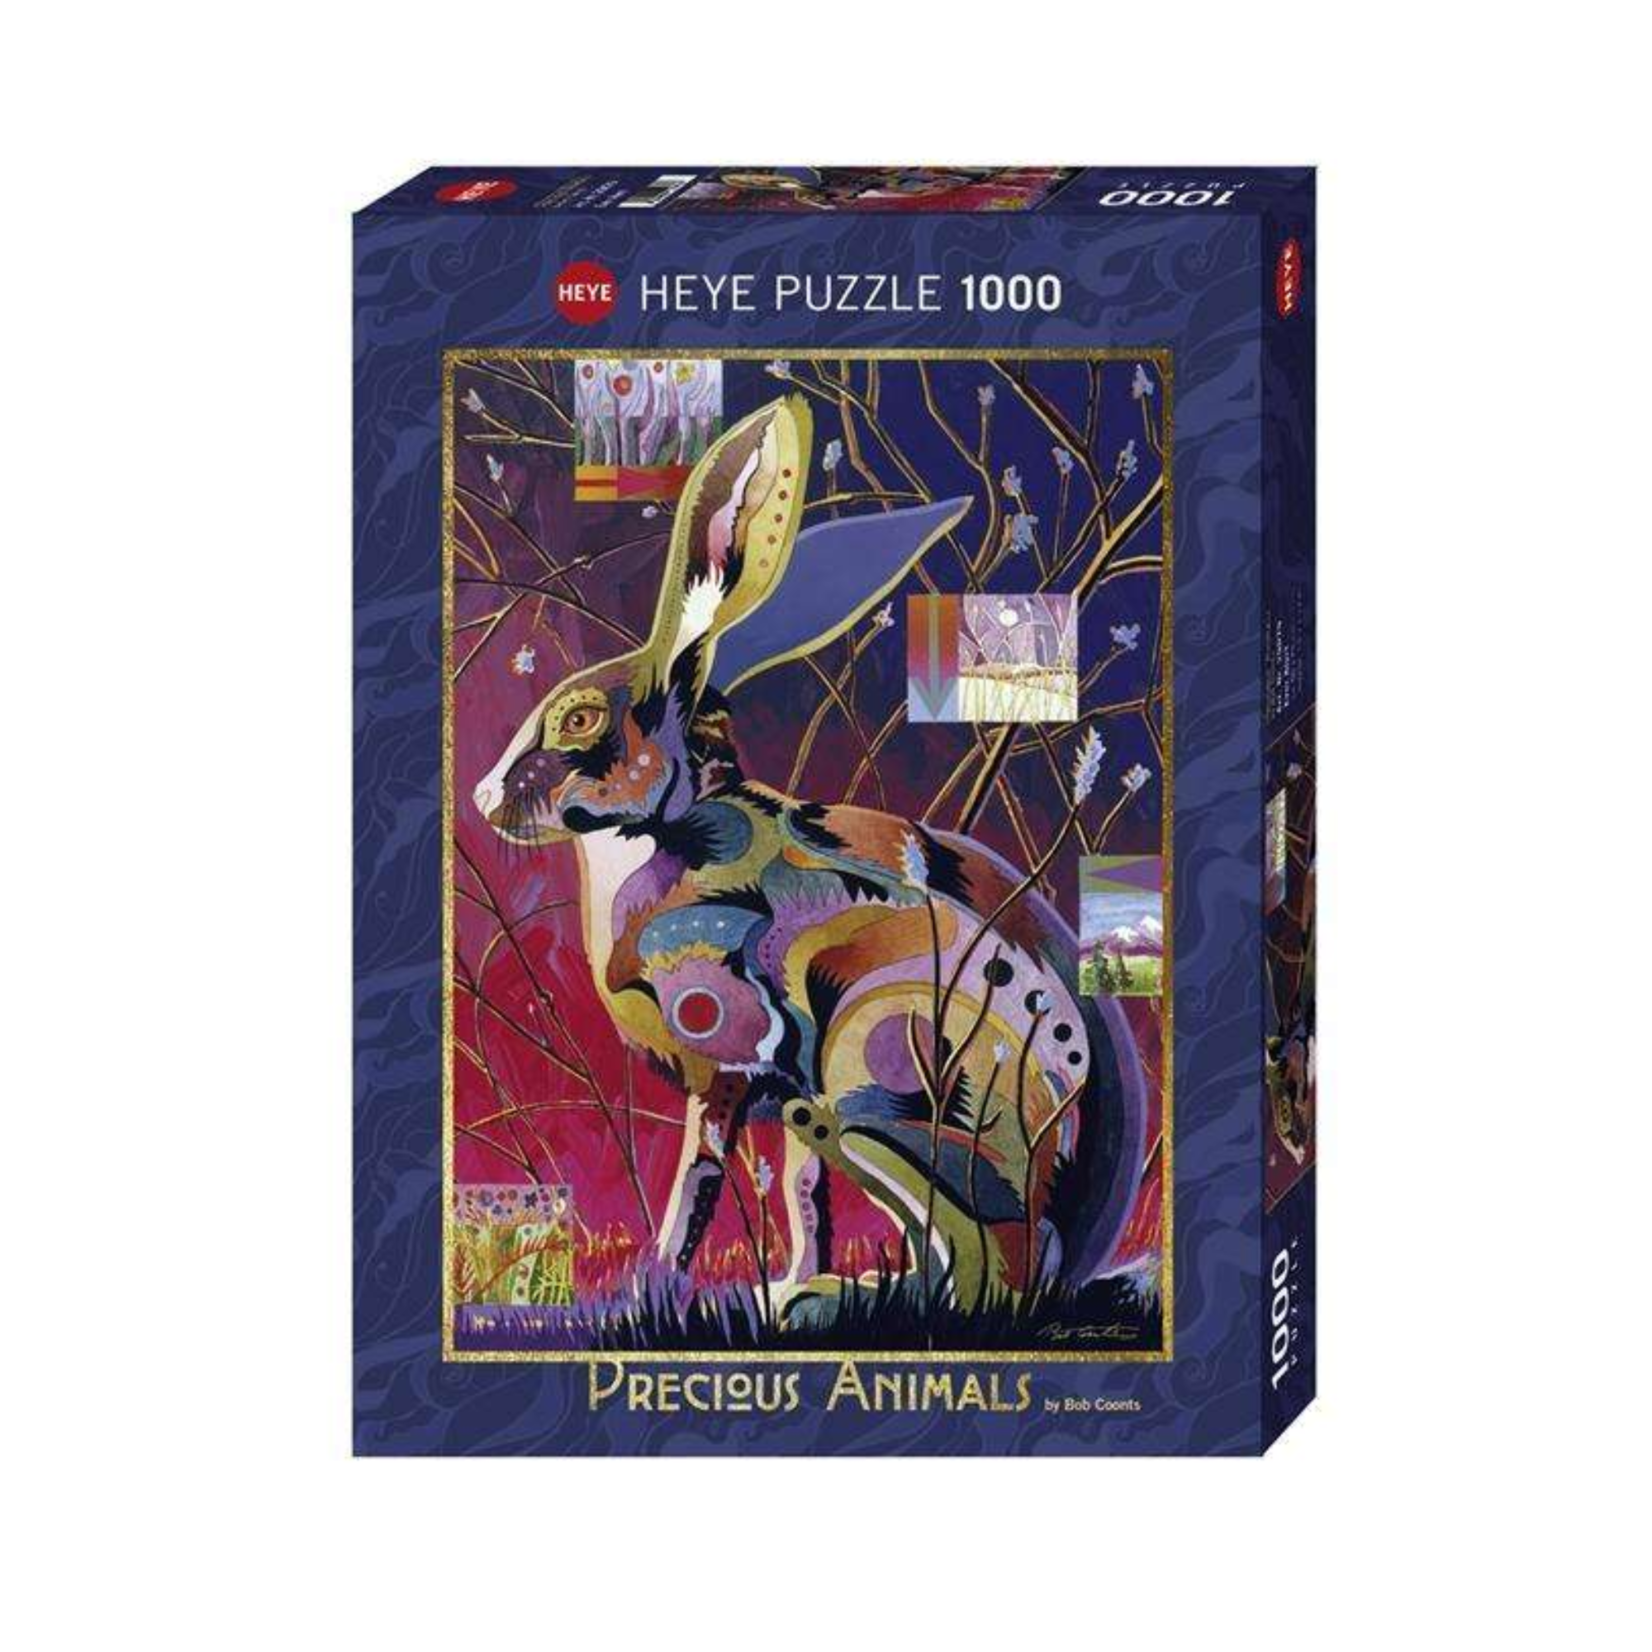 Heye Puzzle 1000: Ever Alert